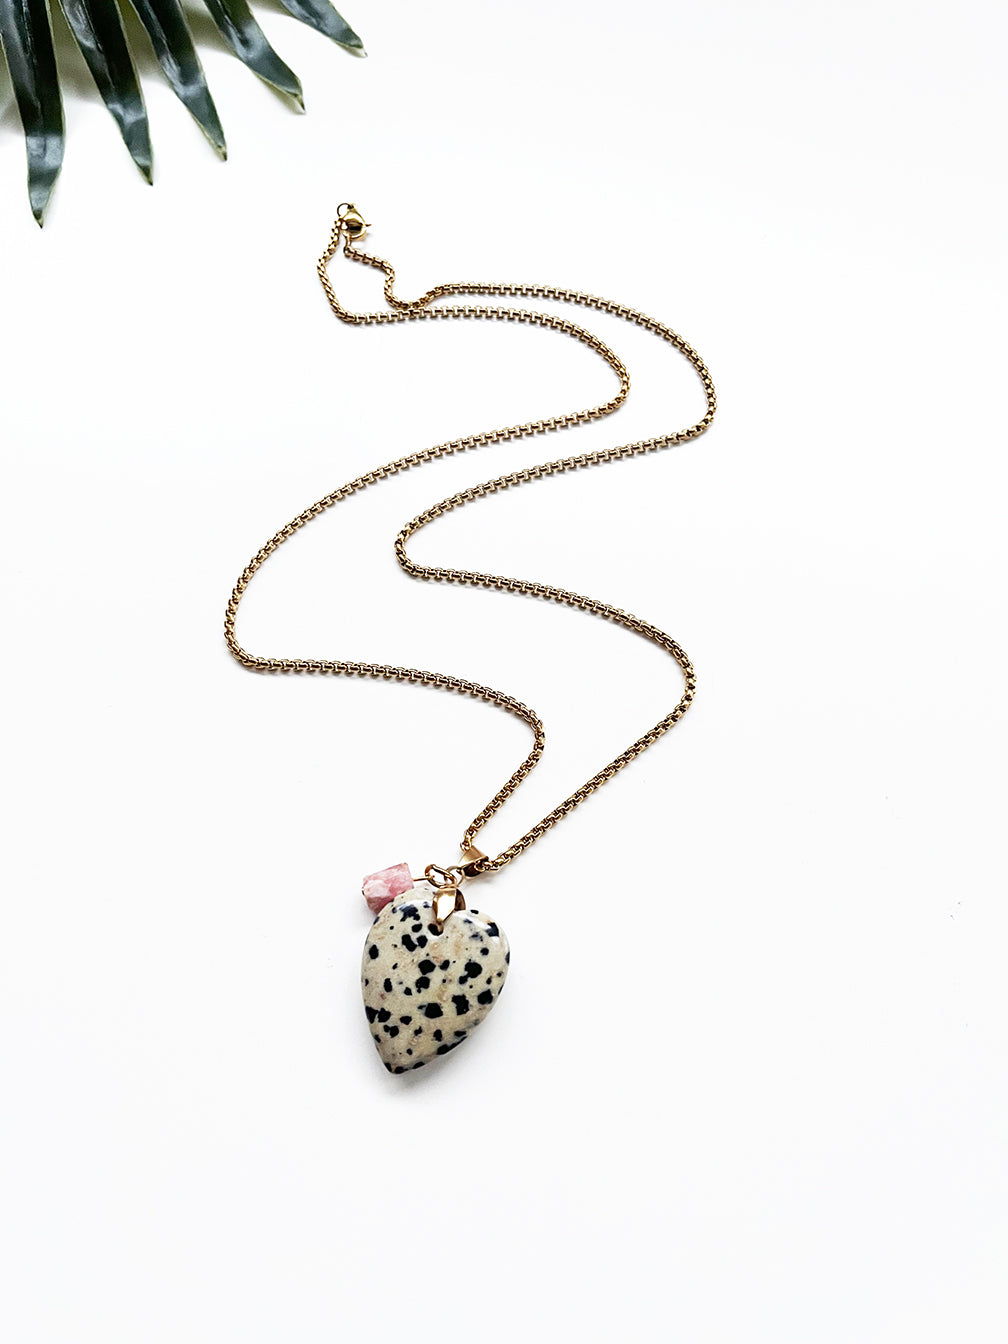 touchstone necklace - dalmatian jasper and rhodochrisite